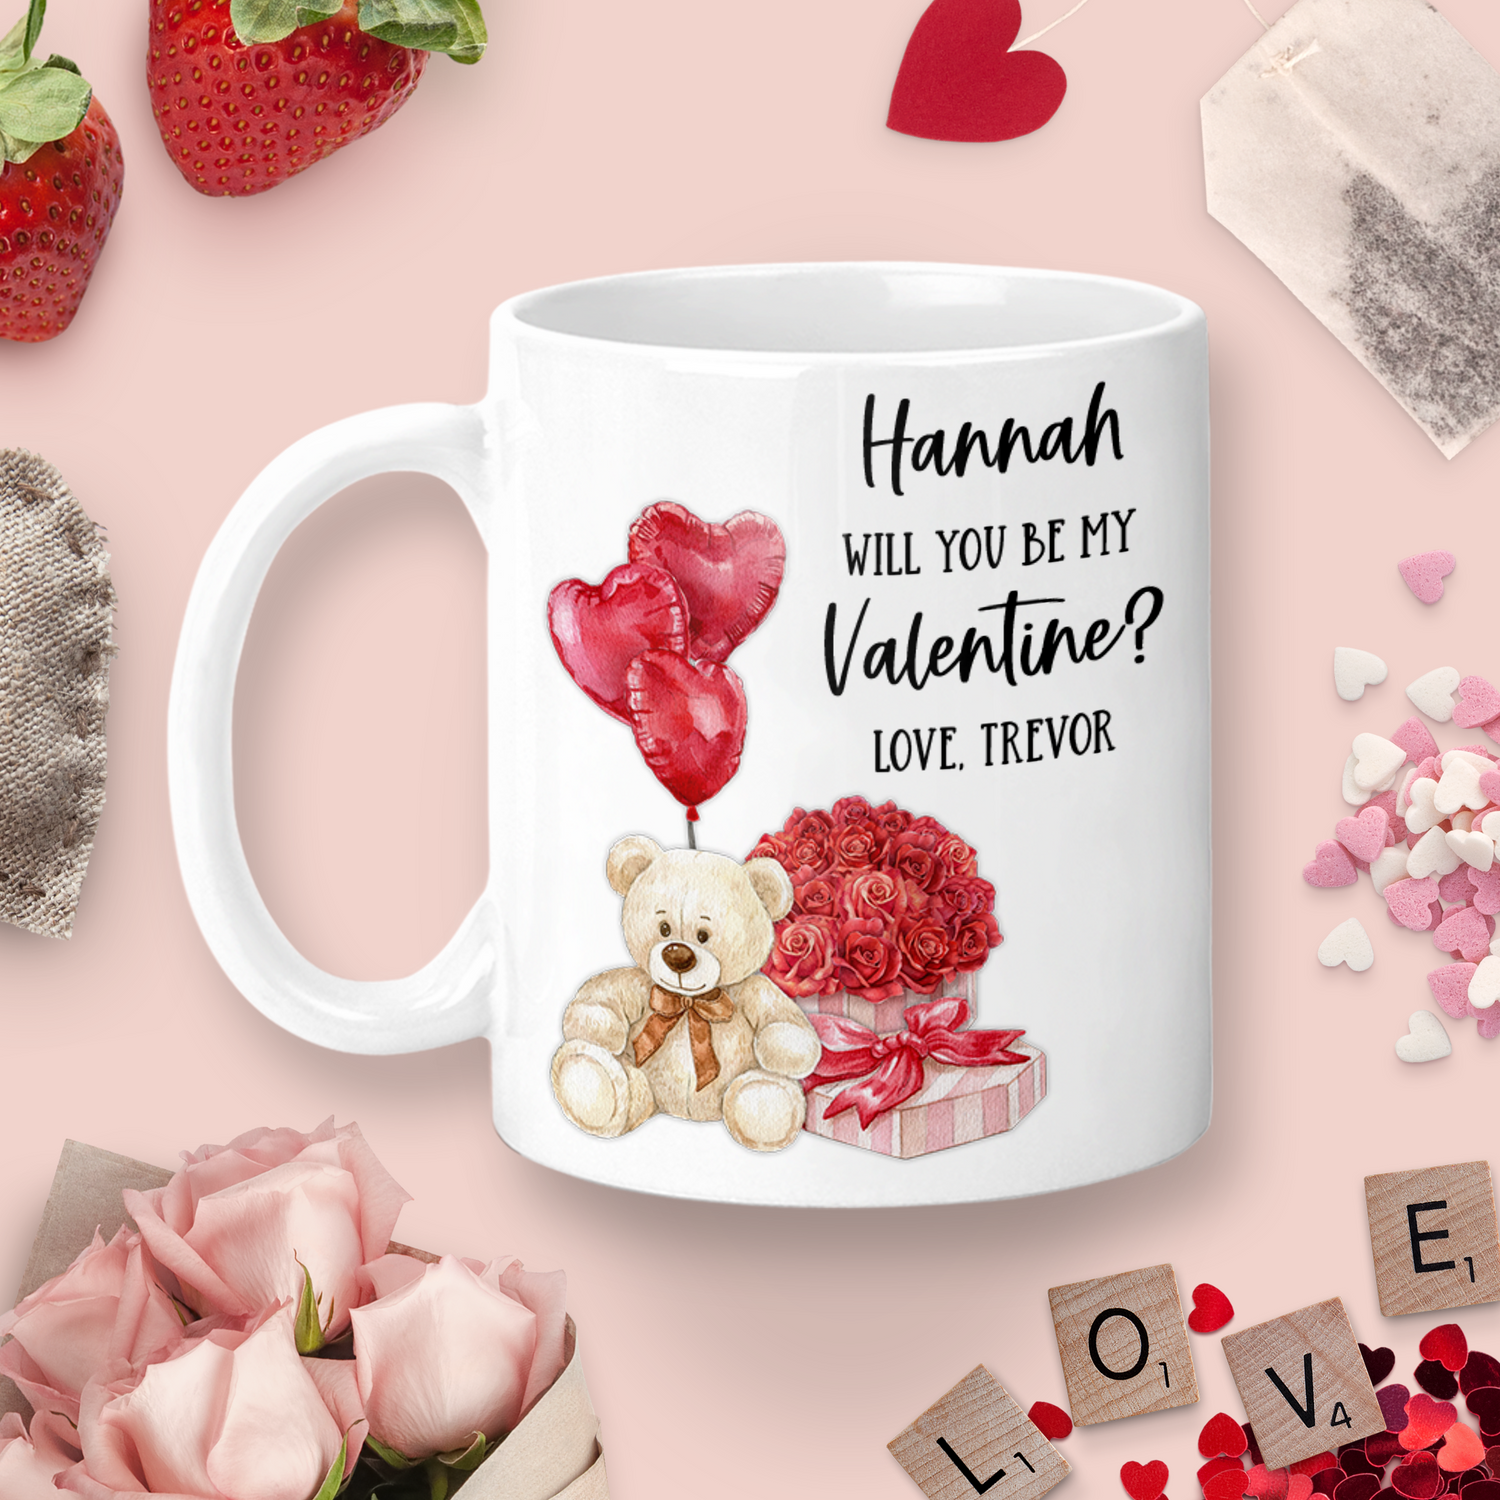 Valentine's Day-themed Mugs